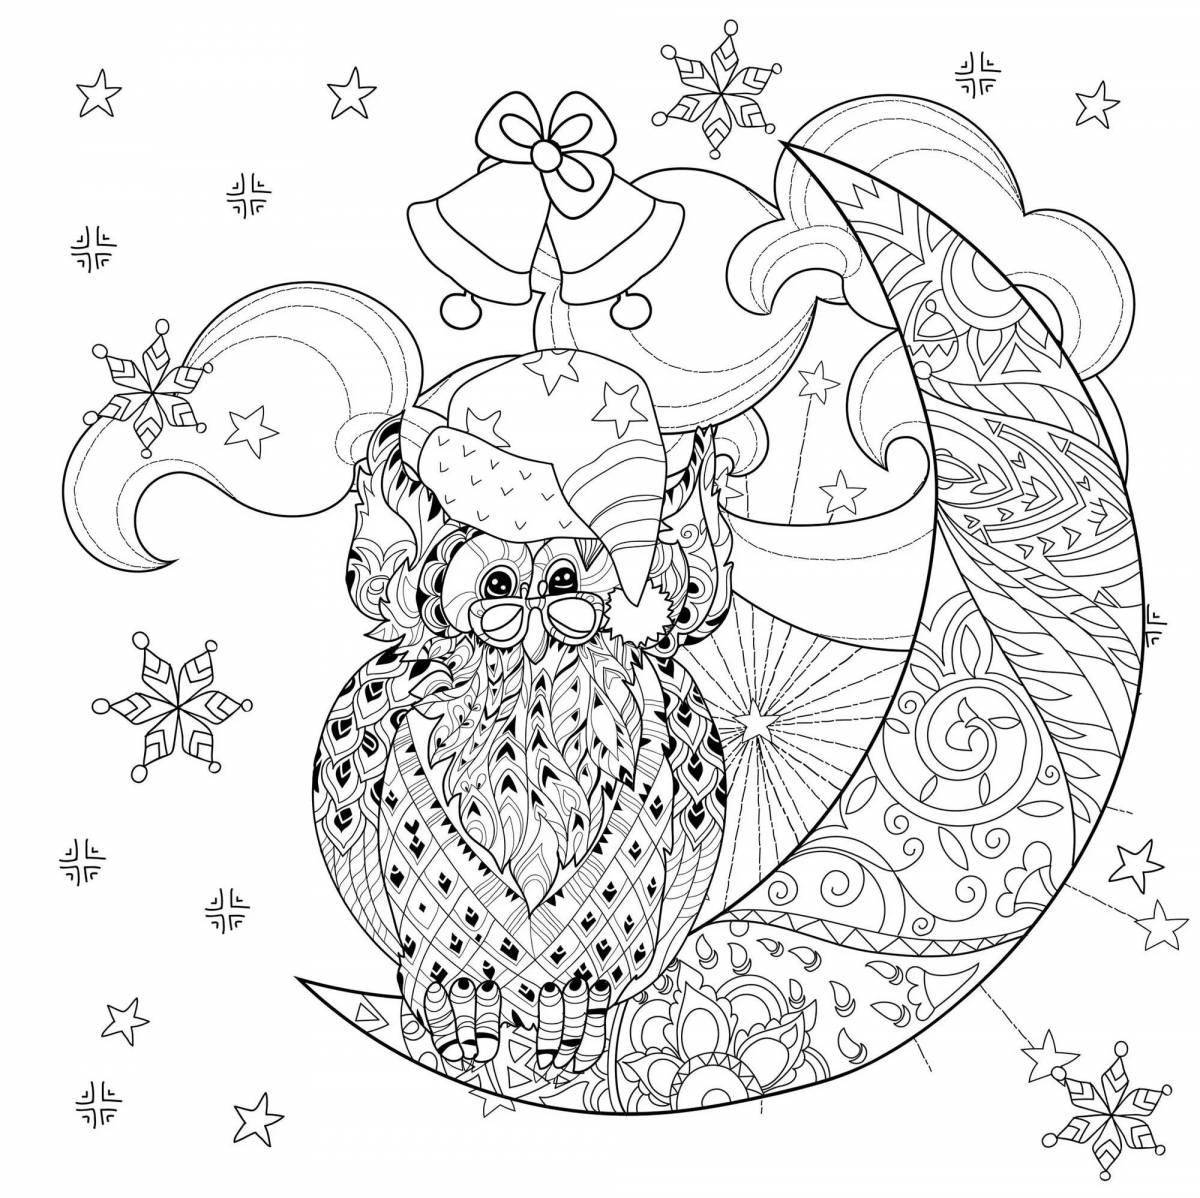 Adorable Christmas owl coloring page